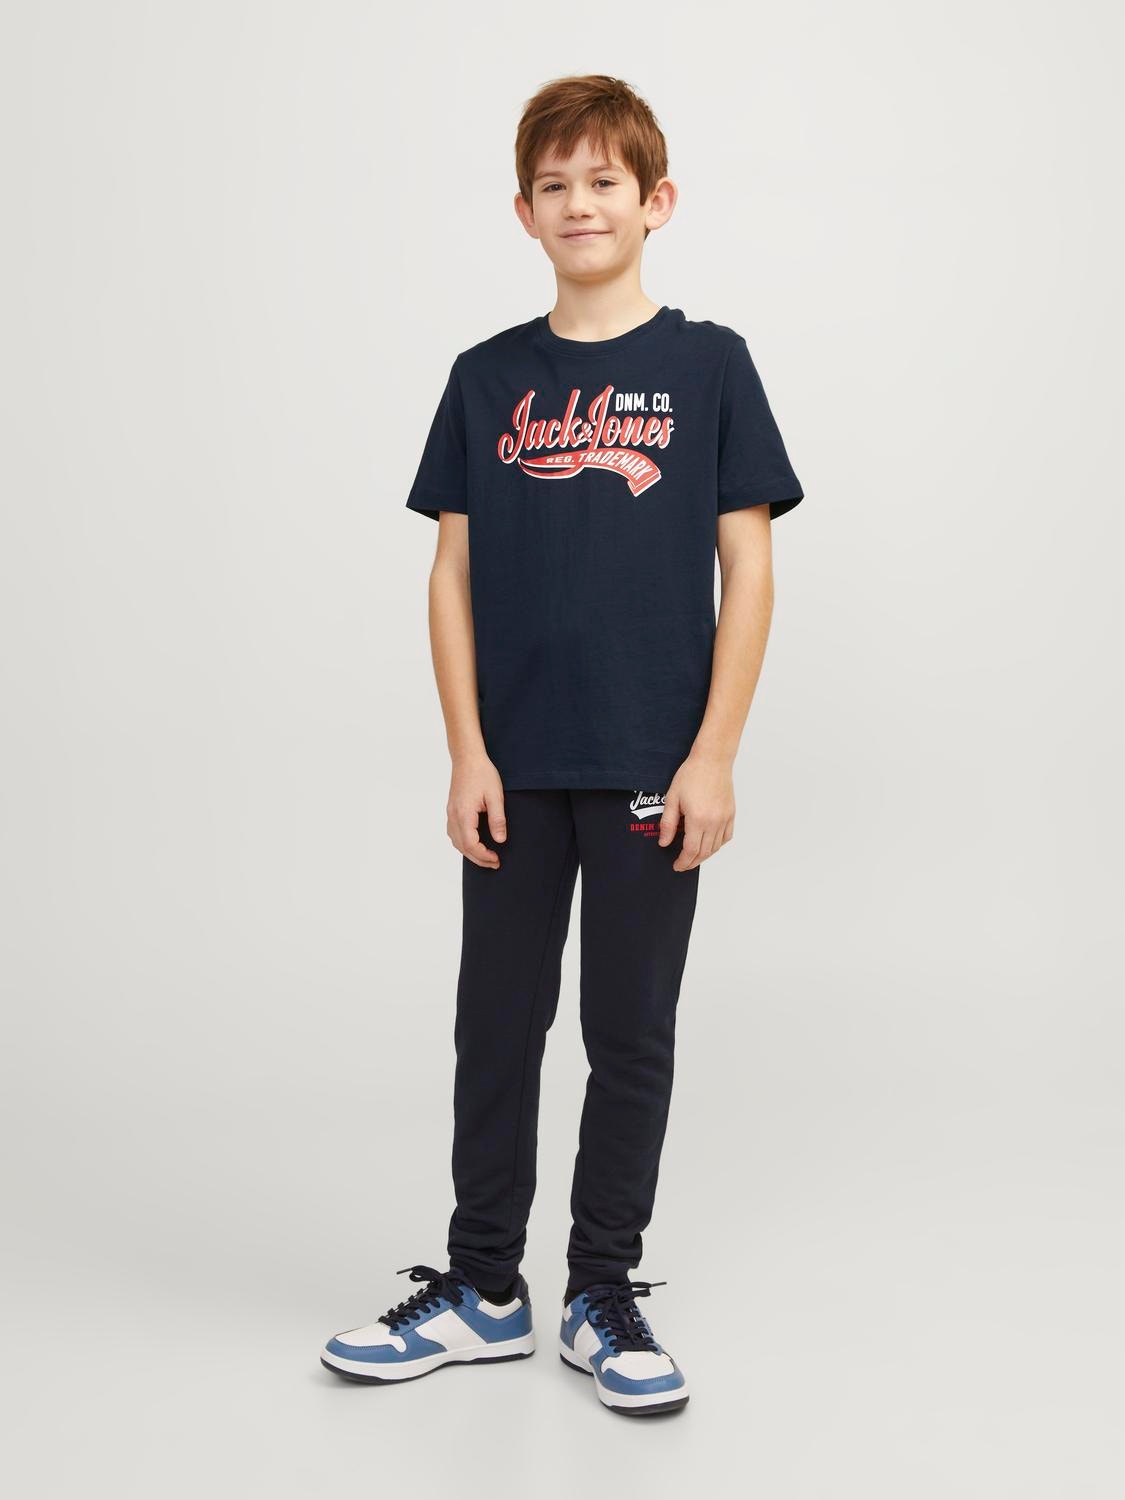 Jack & Jones Gedruckt T-shirt Mini -Navy Blazer - 12257379